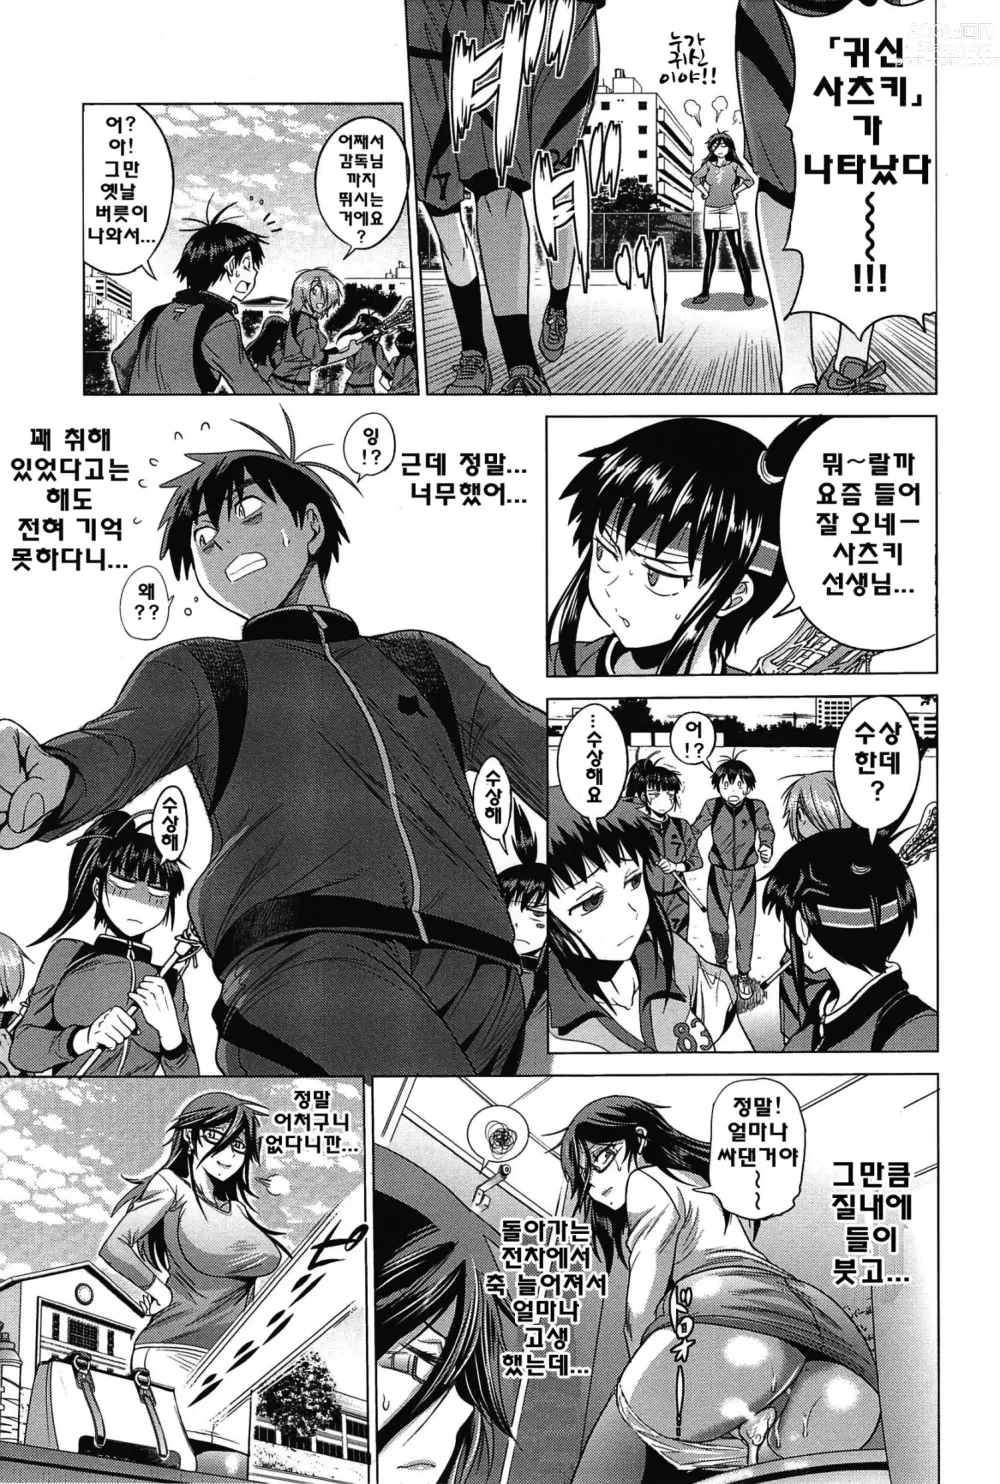 Page 241 of manga Joshi Luck!